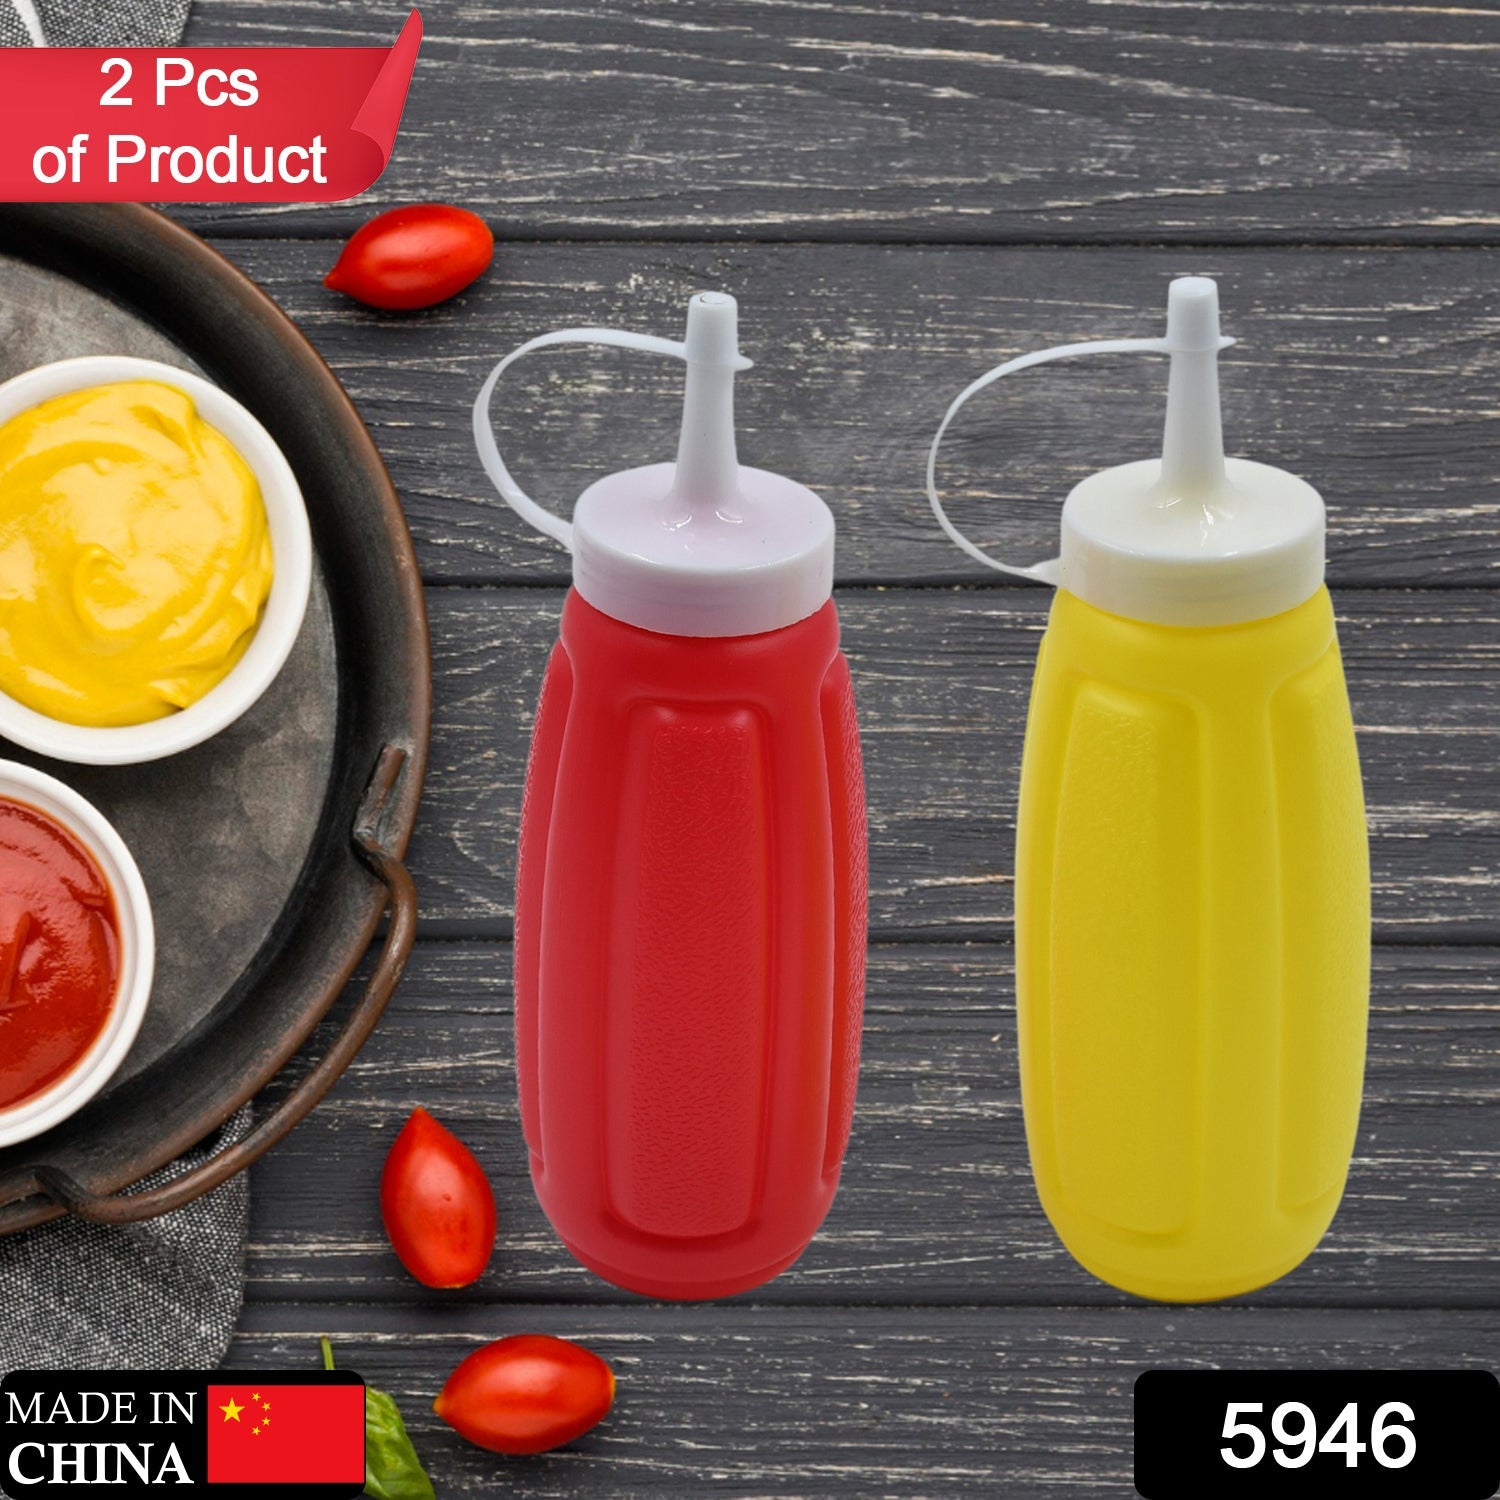 Plastic Squeeze Bottle Ketchup Mustard Honey Sauce Dispenser Bottle (2 Pc Set)